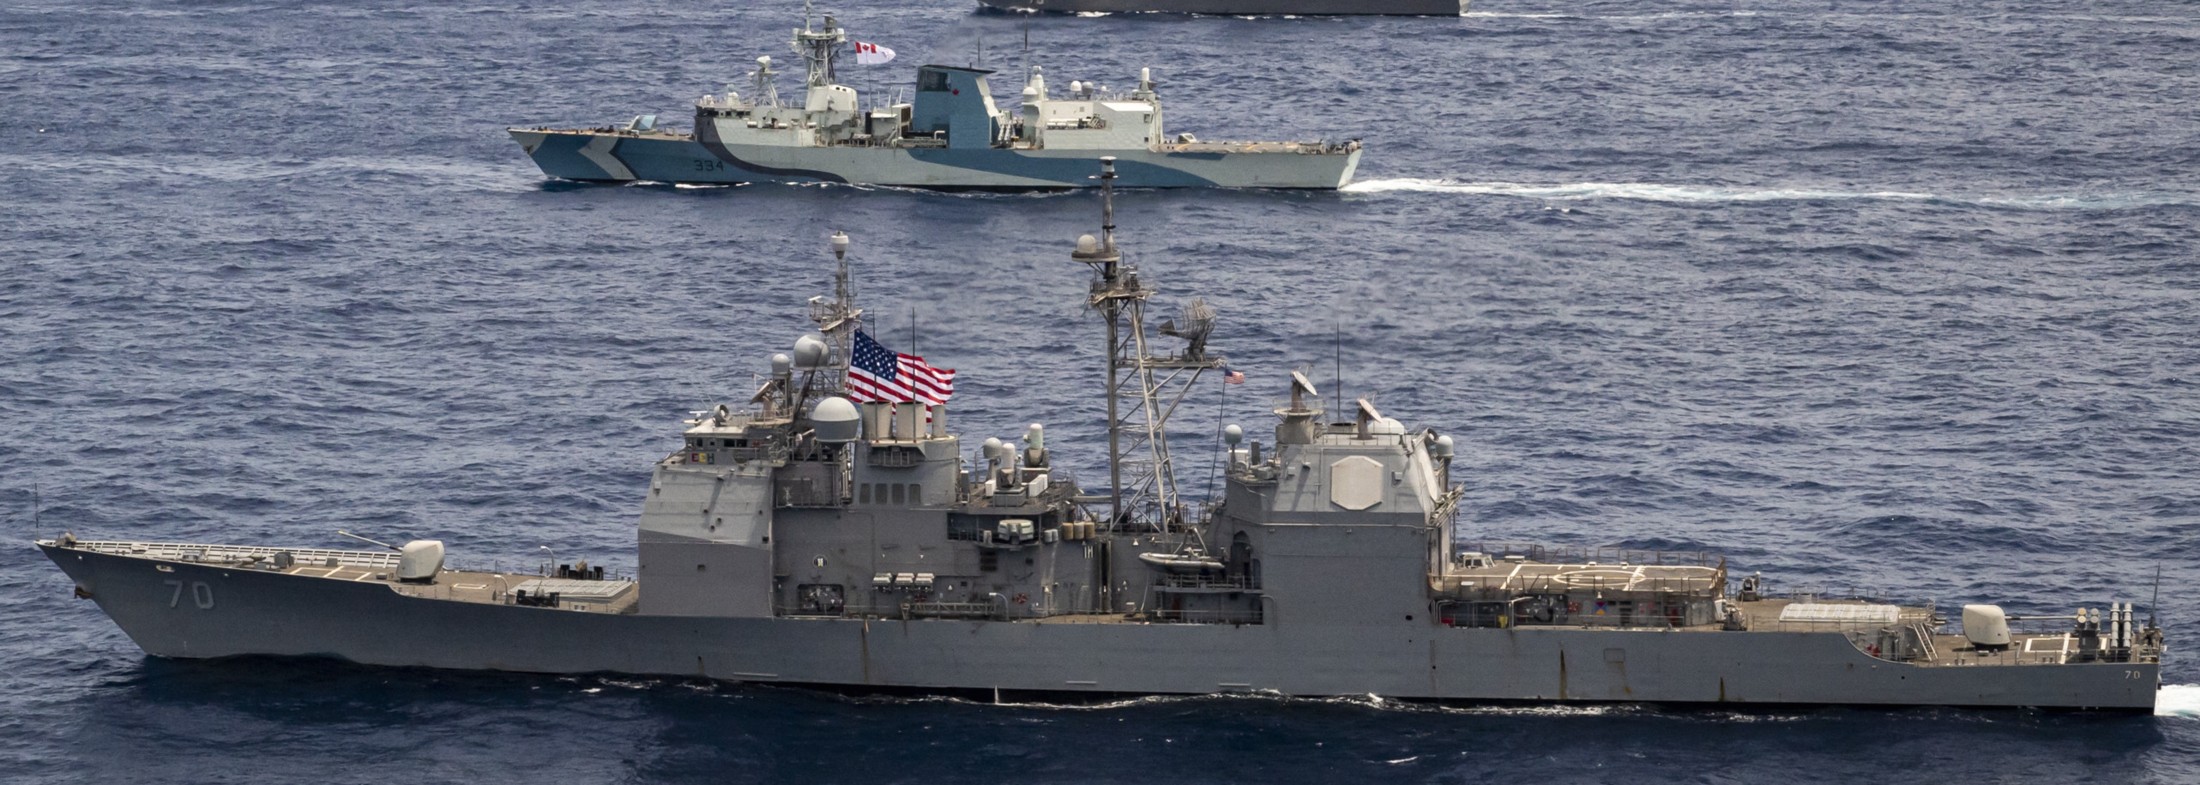 cg-70 uss lake erie ticonderoga class guided missile cruiser us navy exercise rimpac 2020 131